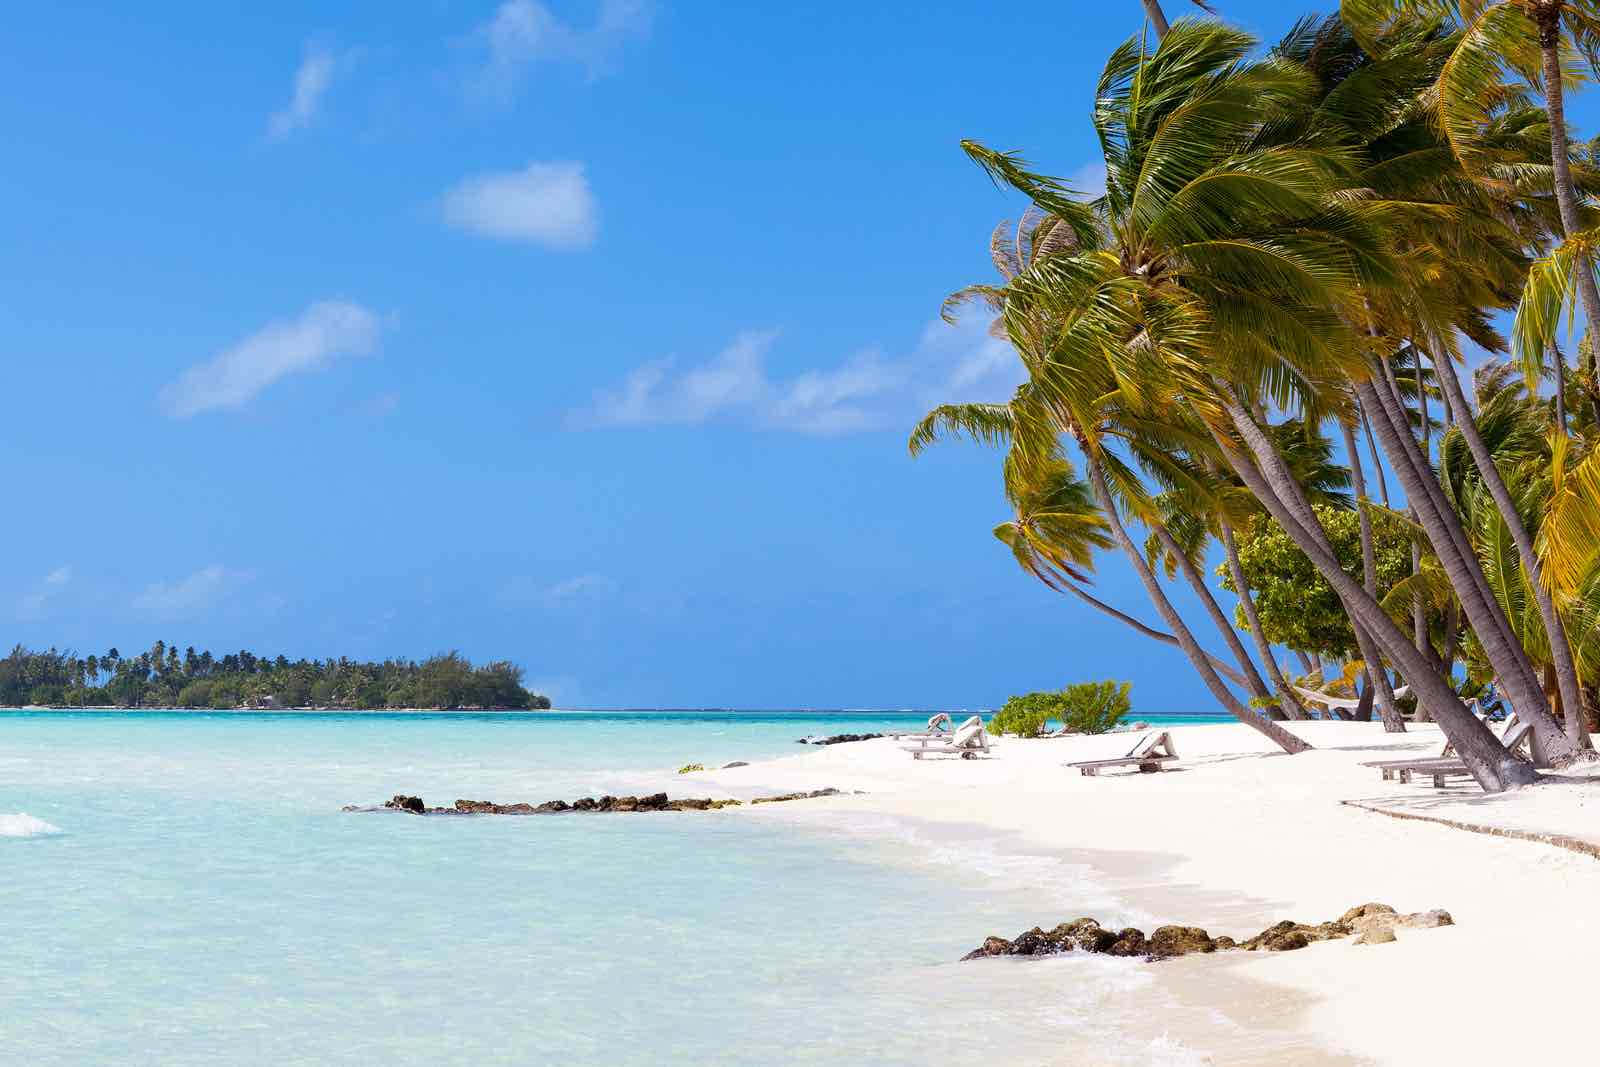 Stunning Bora Bora Beach with overwater bungalows and lush green scenery. Wallpaper